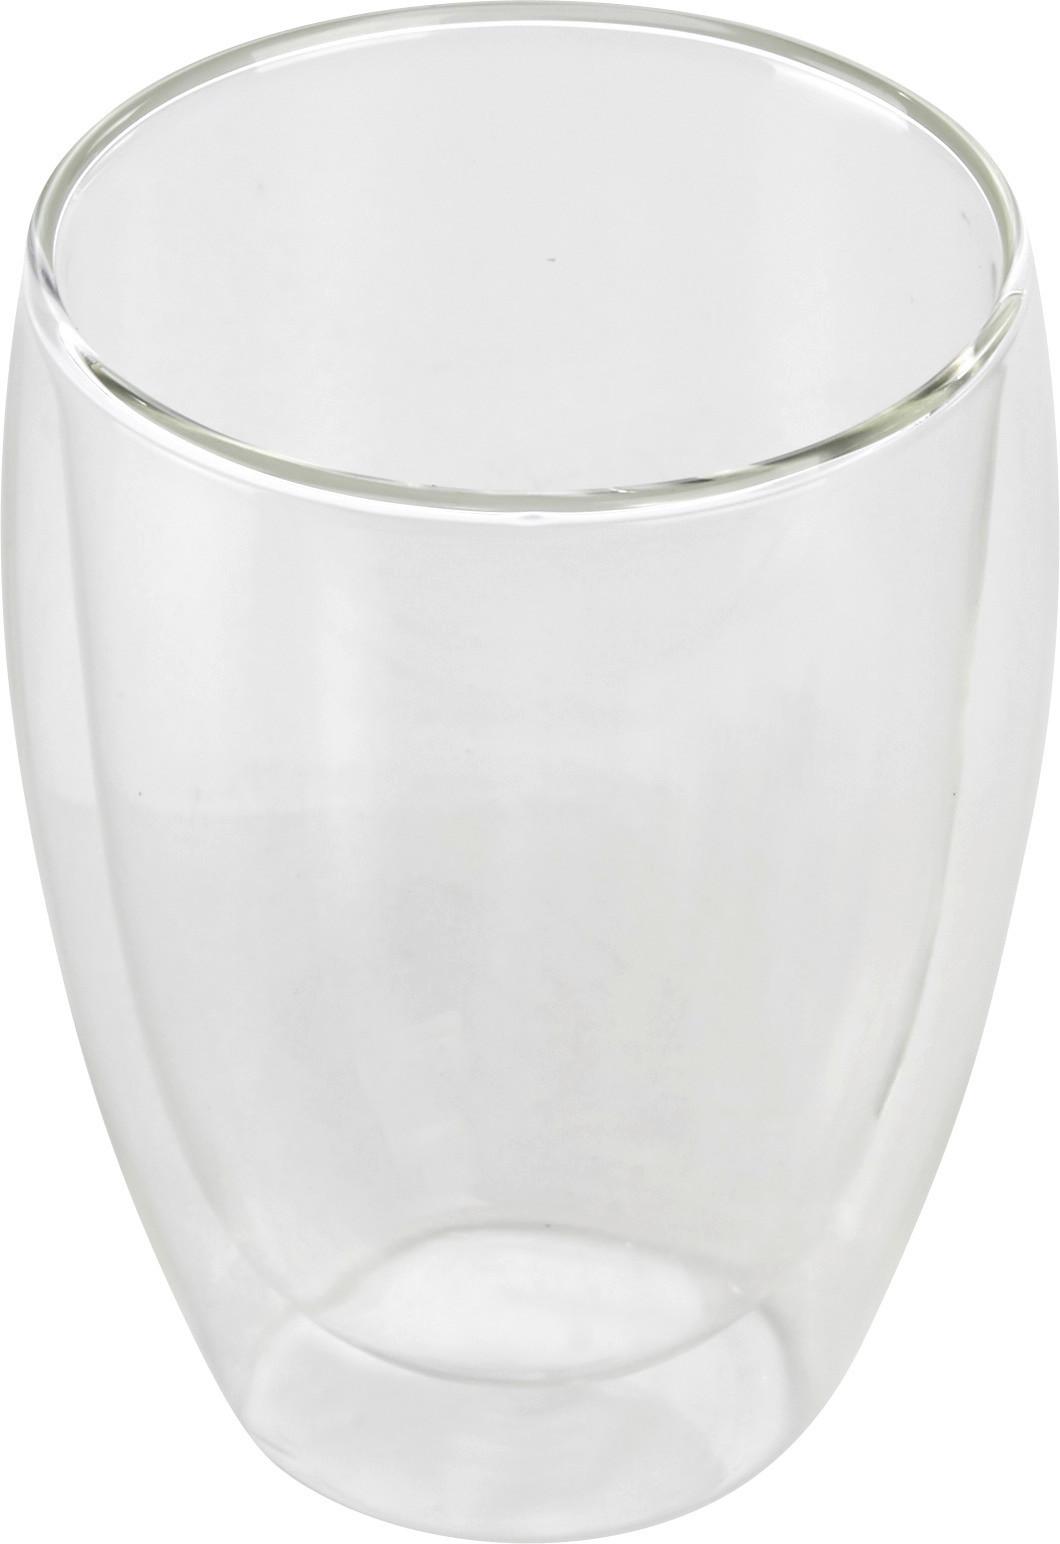 Teeglas Doppelwandig Jordan, ca. 350 ml - Klar, ROMANTIK / LANDHAUS, Glas - James Wood